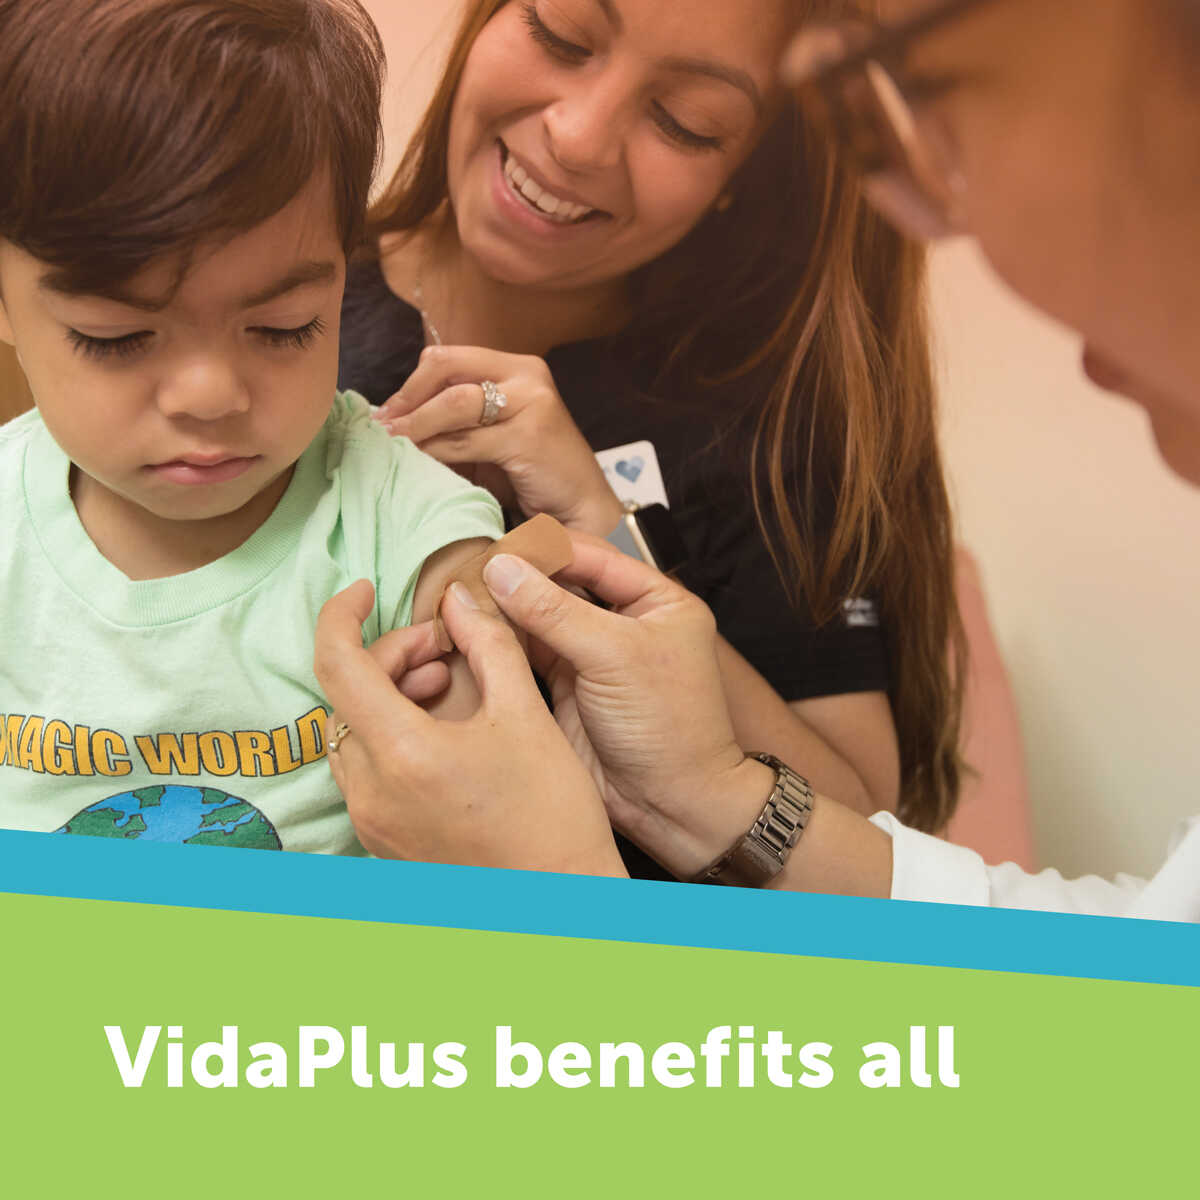 VidaPlus benefits all.